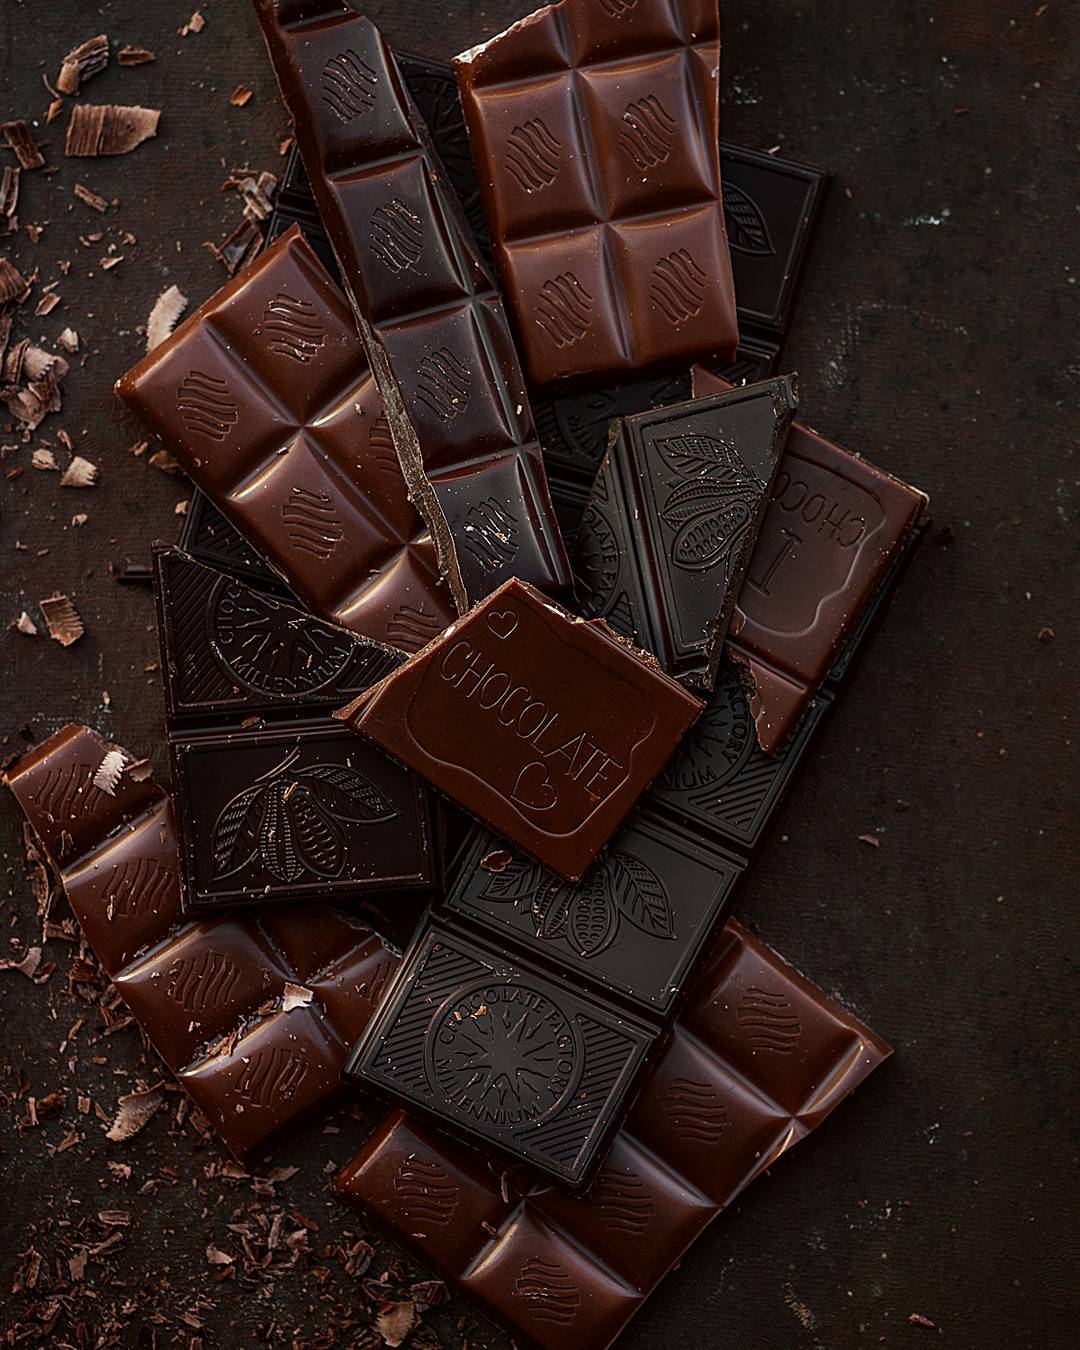 Фото Плитки черного шоколада